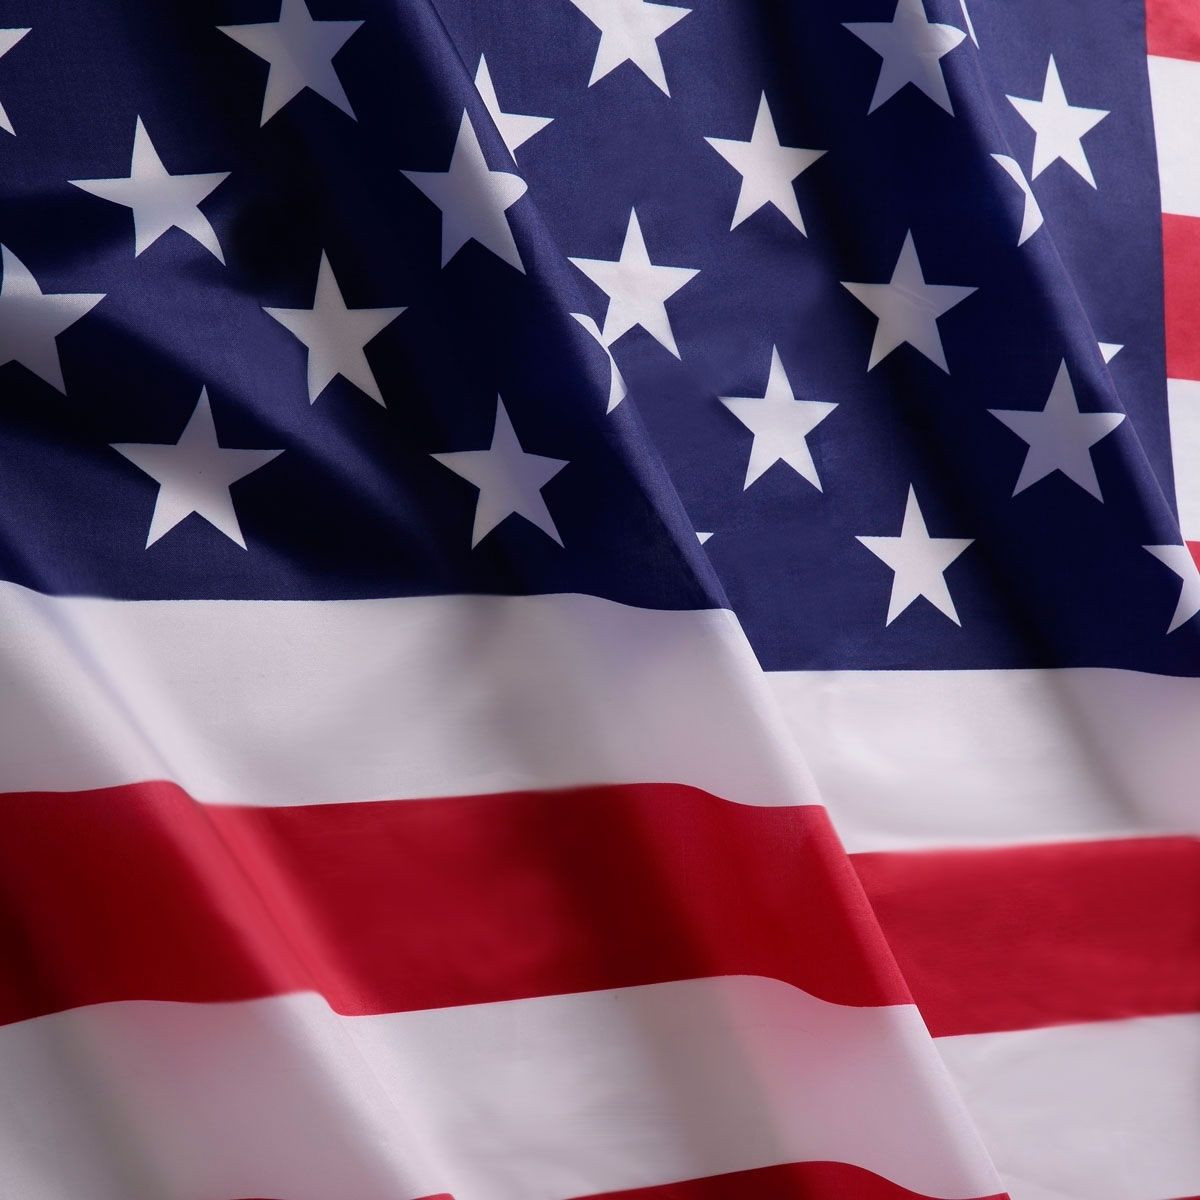 3 Ft. x 5 Ft. US American Printed Flag